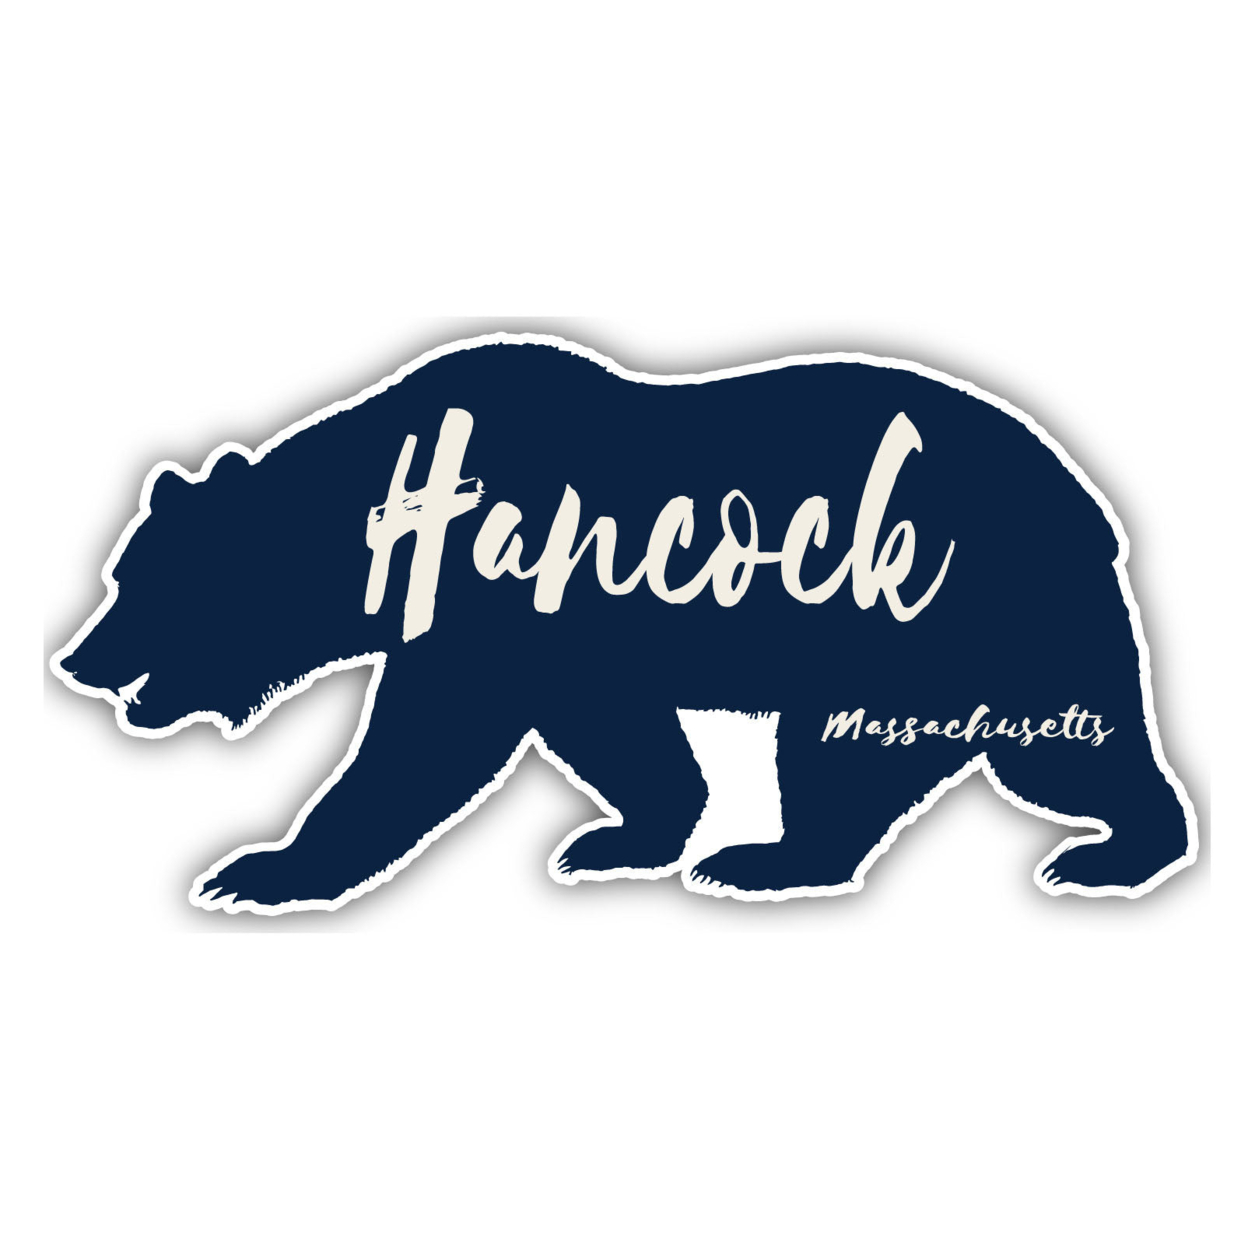 Hancock Massachusetts Souvenir Decorative Stickers (Choose Theme And Size) - Single Unit, 2-Inch, Tent